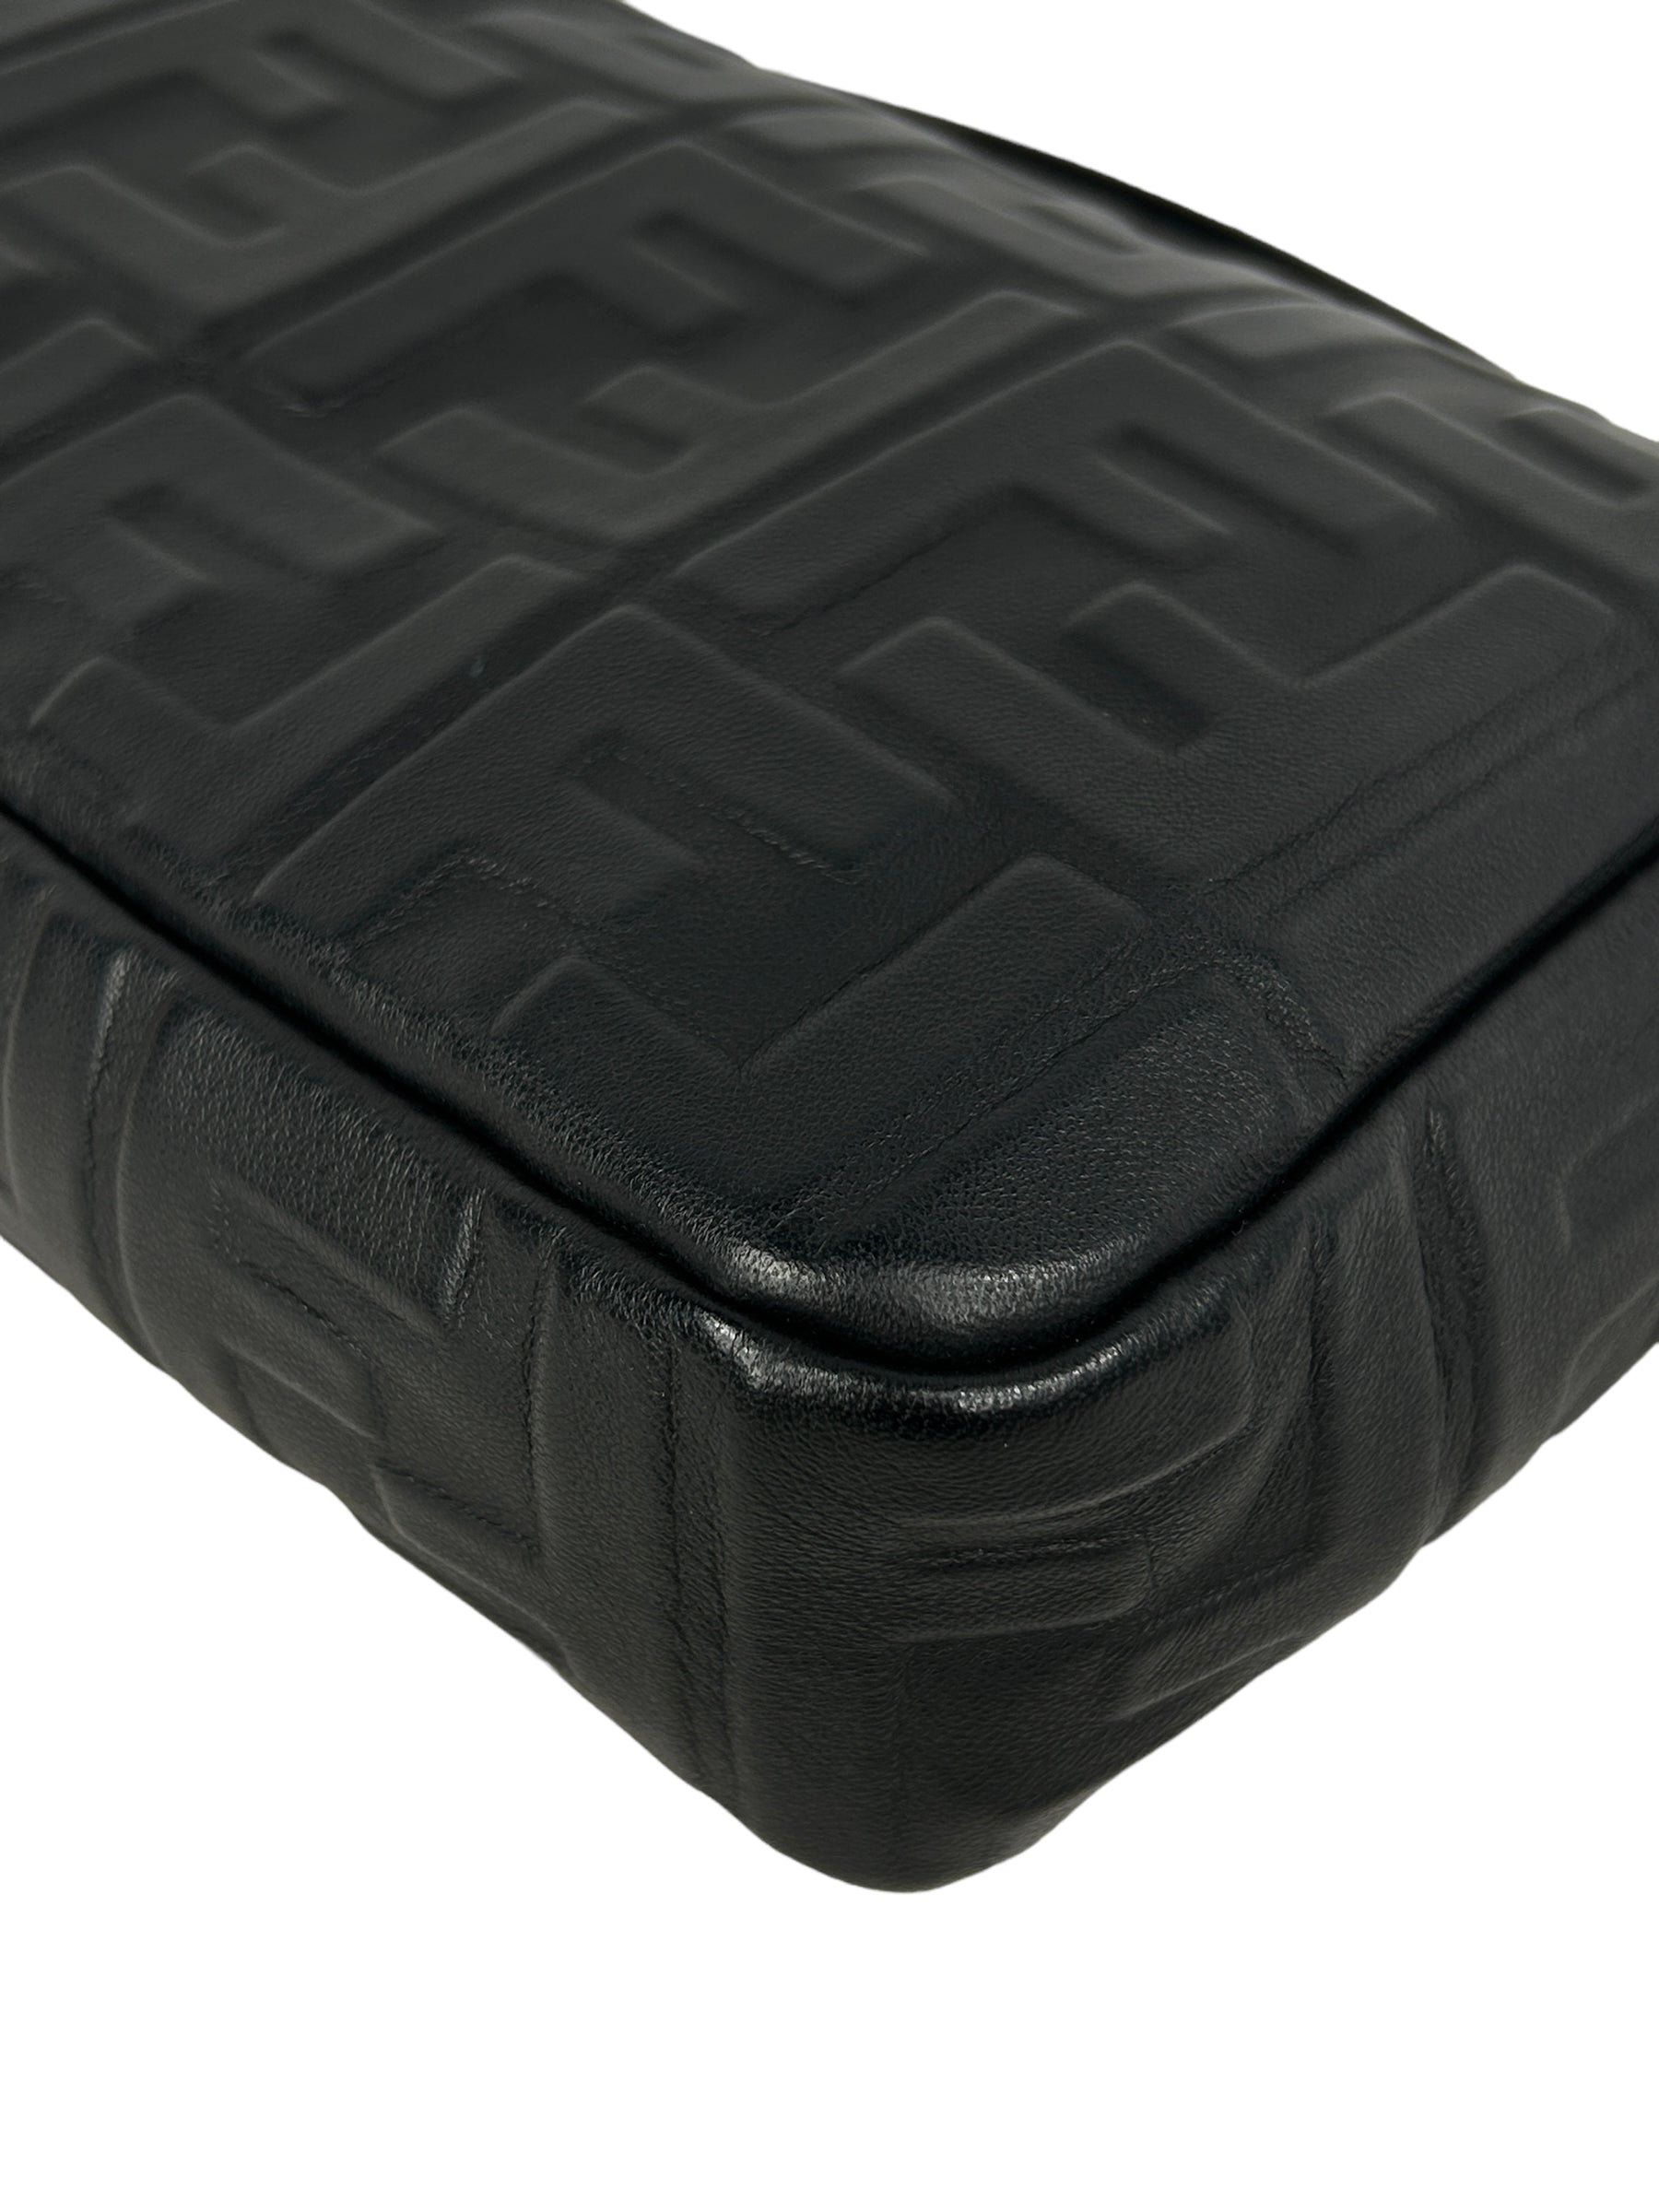 Black Embossed Lambskin Leather Baguette Shoulder Bag w/GHW